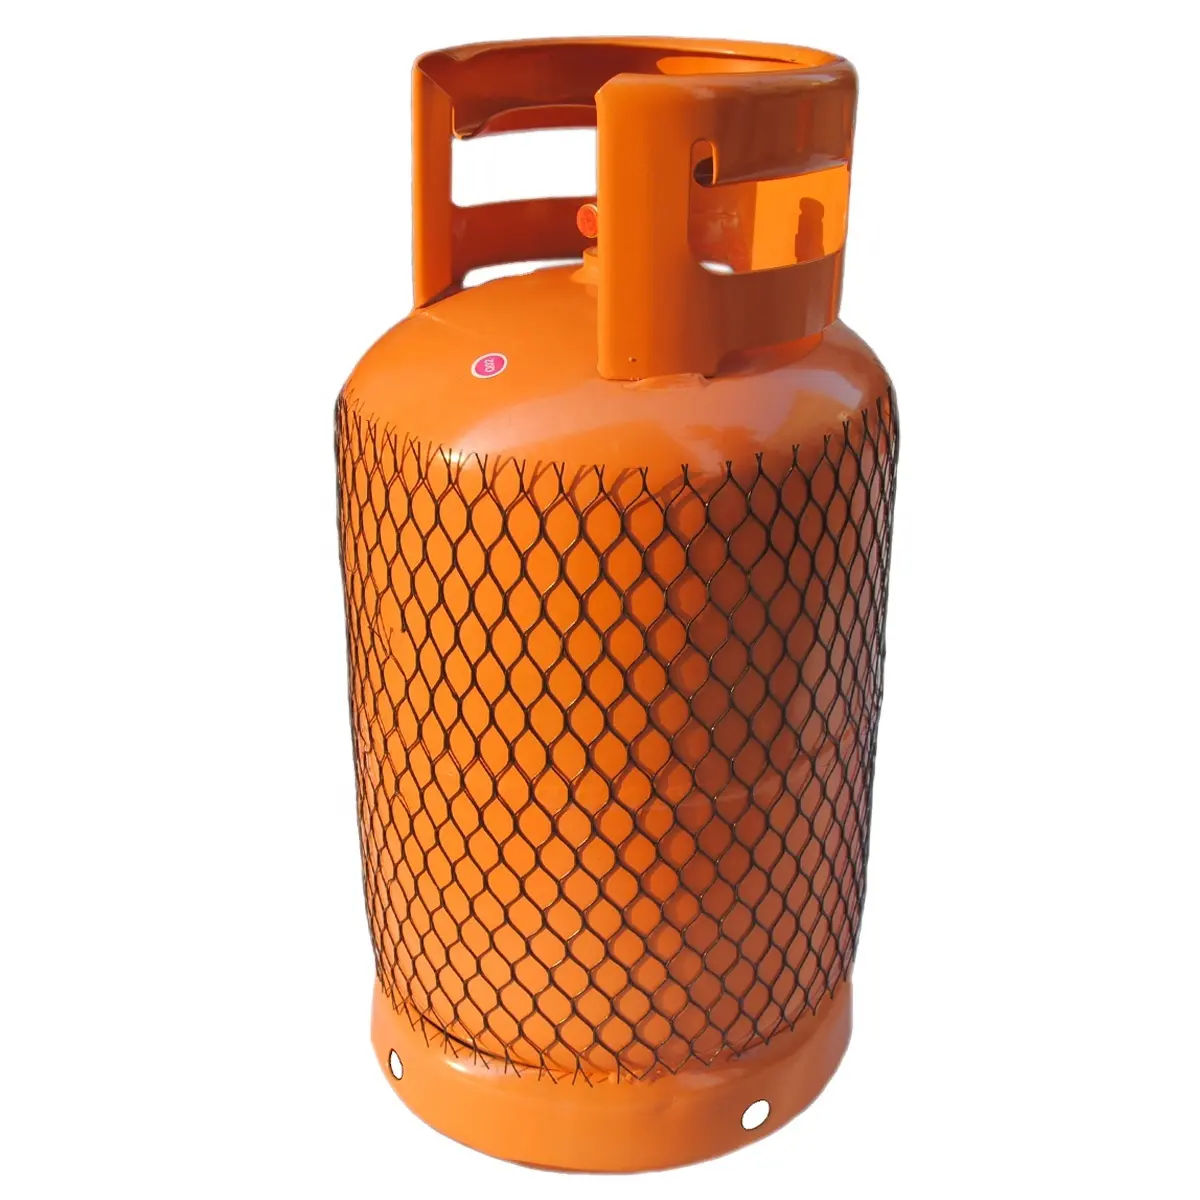 Cnjg Nigeria Lpg Thuisgebruik Gas Cilinder, 12.5Kg Lege Gas Fles